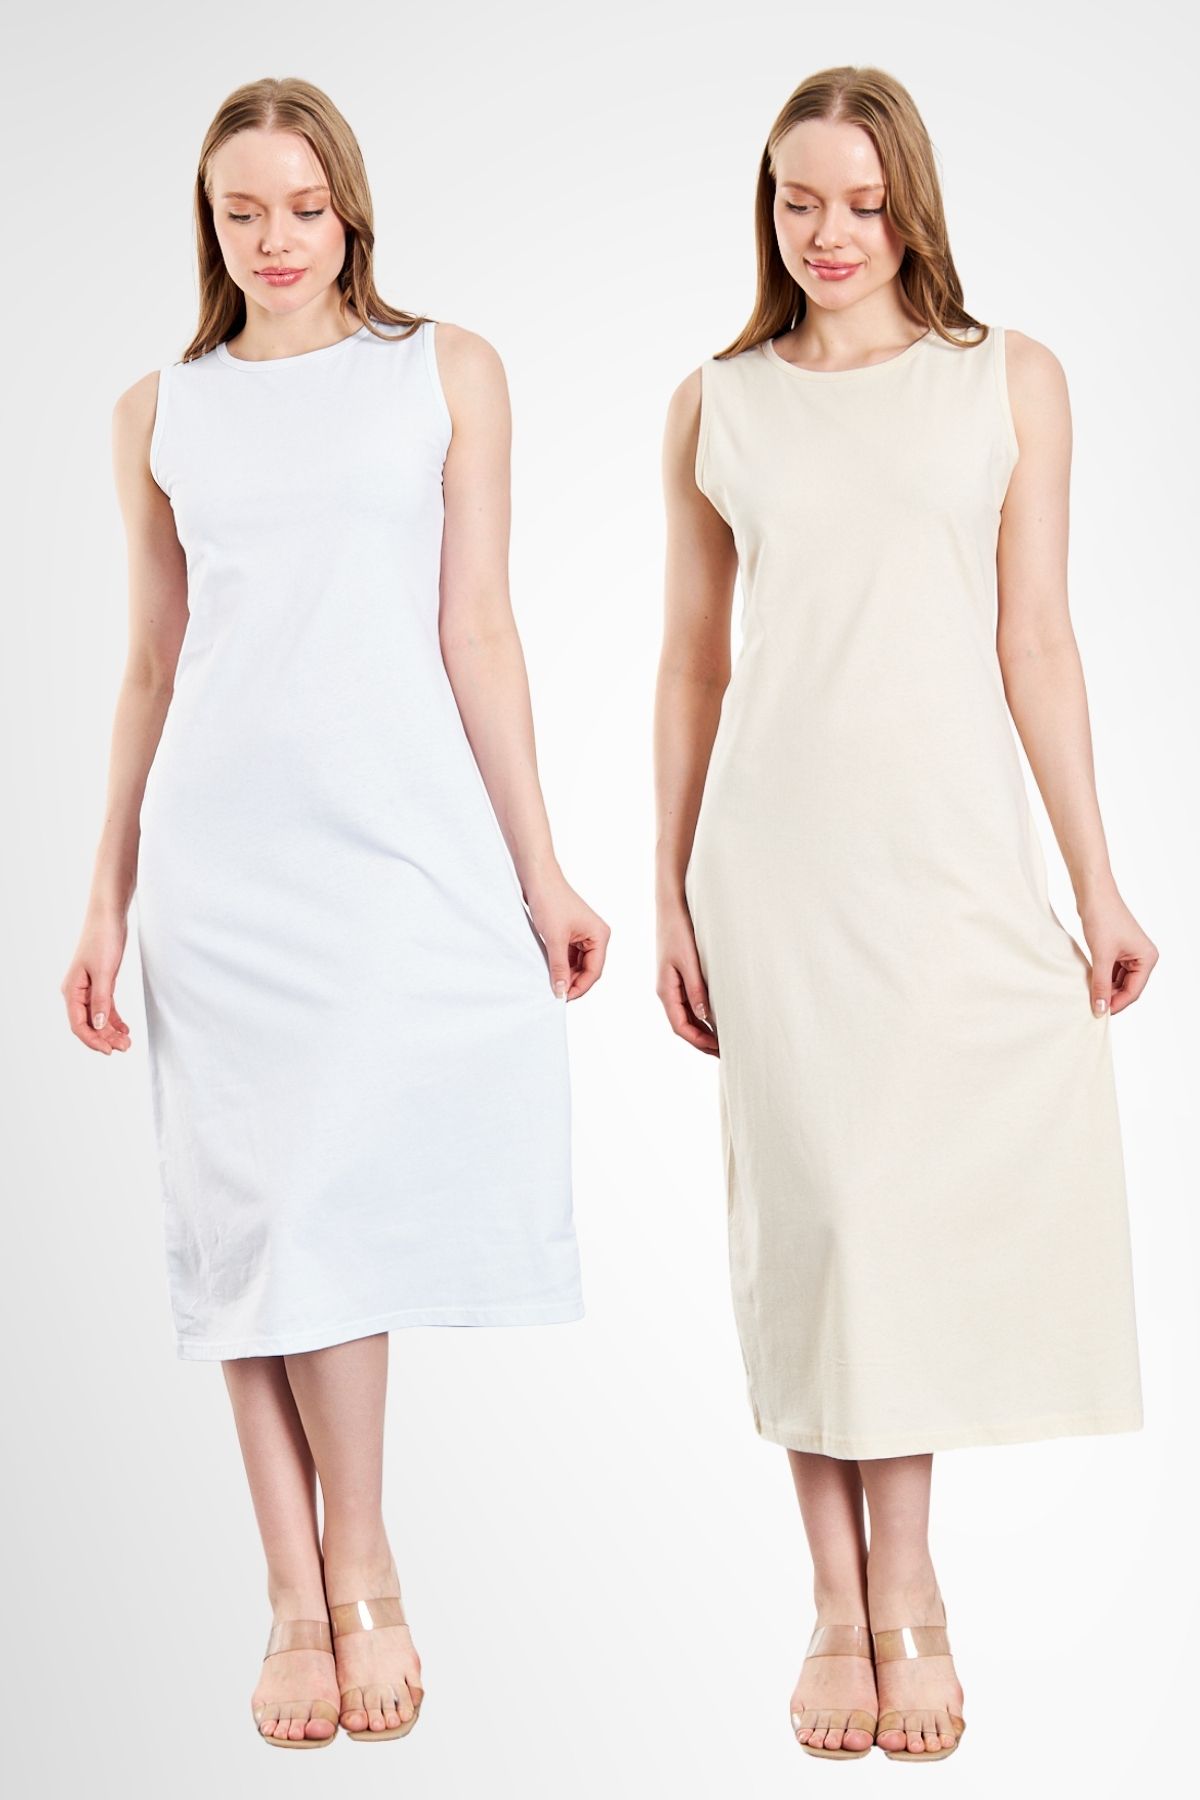 ESPİNA Uzun Kolsuz Elbise Astarı Içlik Jüpon Kombinezon 2'li Set Ekru - Beyaz 2'li Set